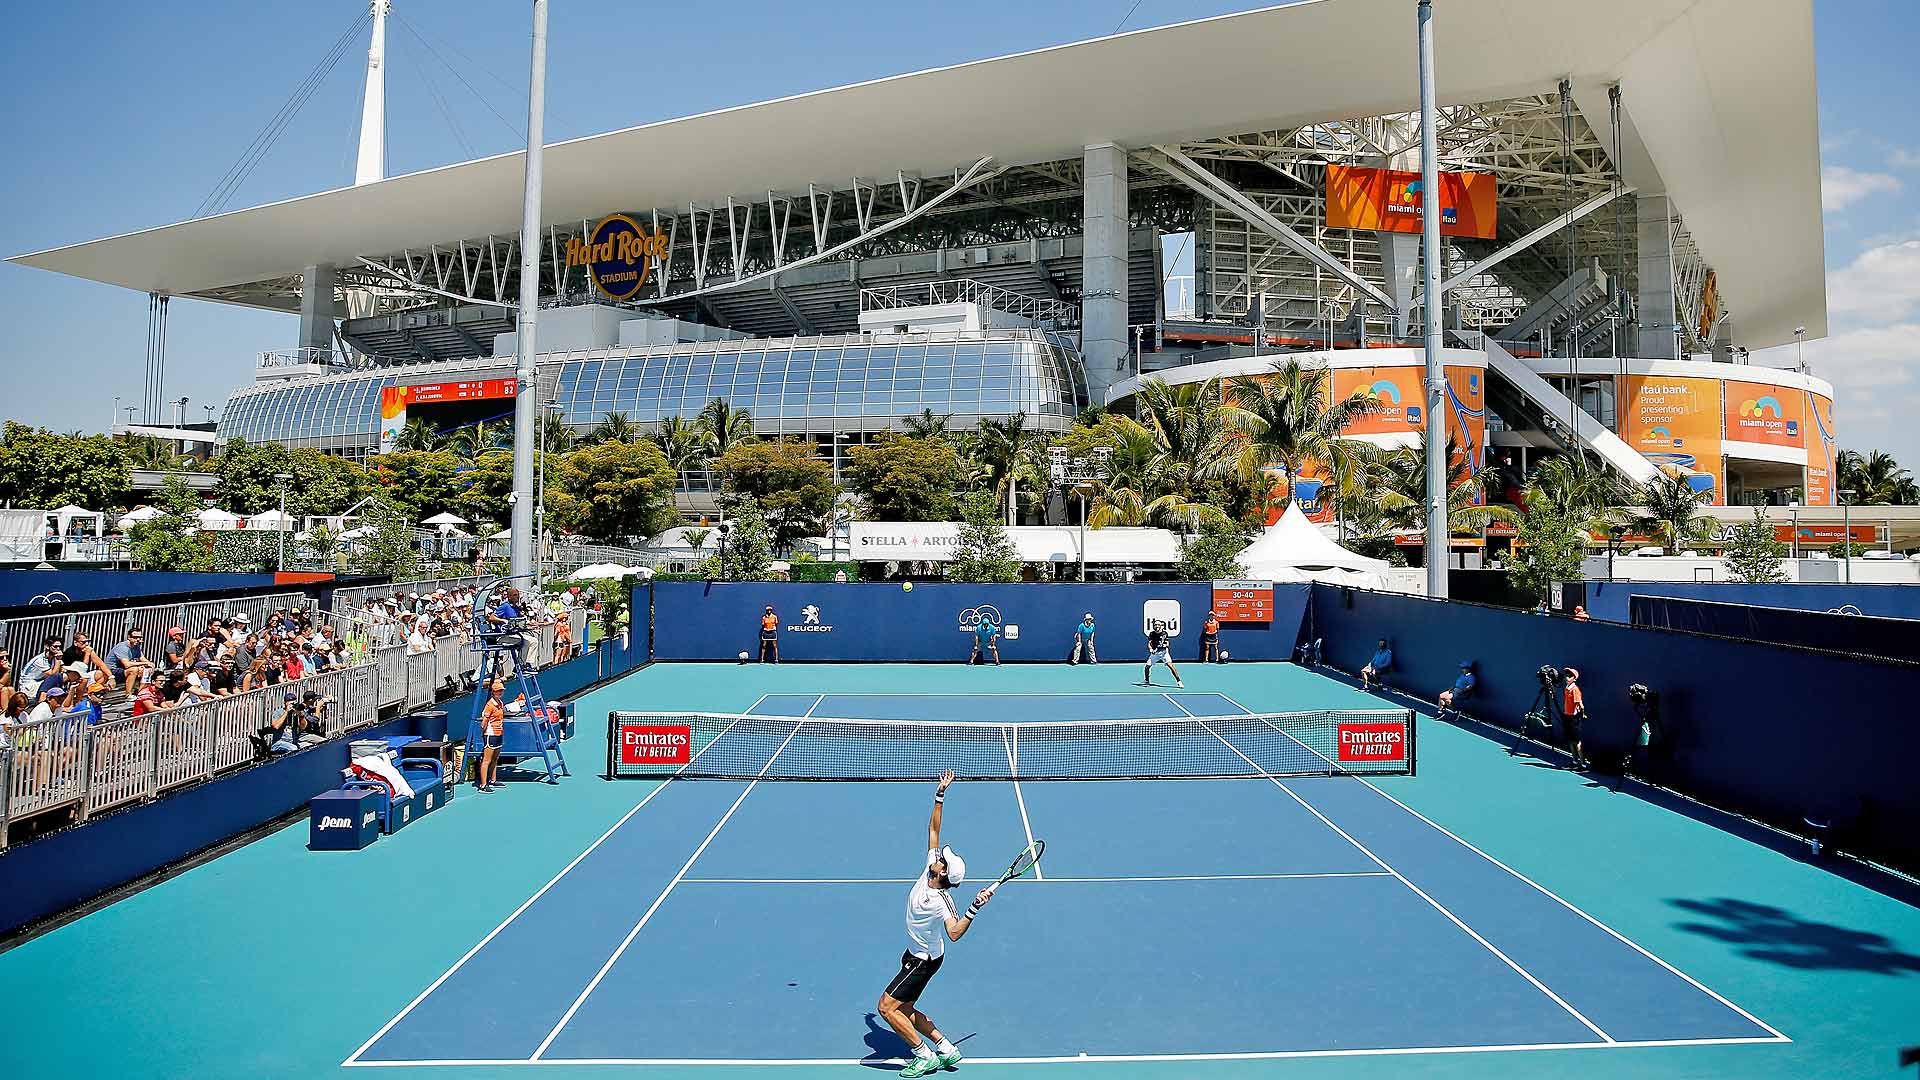 Coffee and Larry Csonka To Rocking Tennis Miamis New Venue ATP Tour Tennis